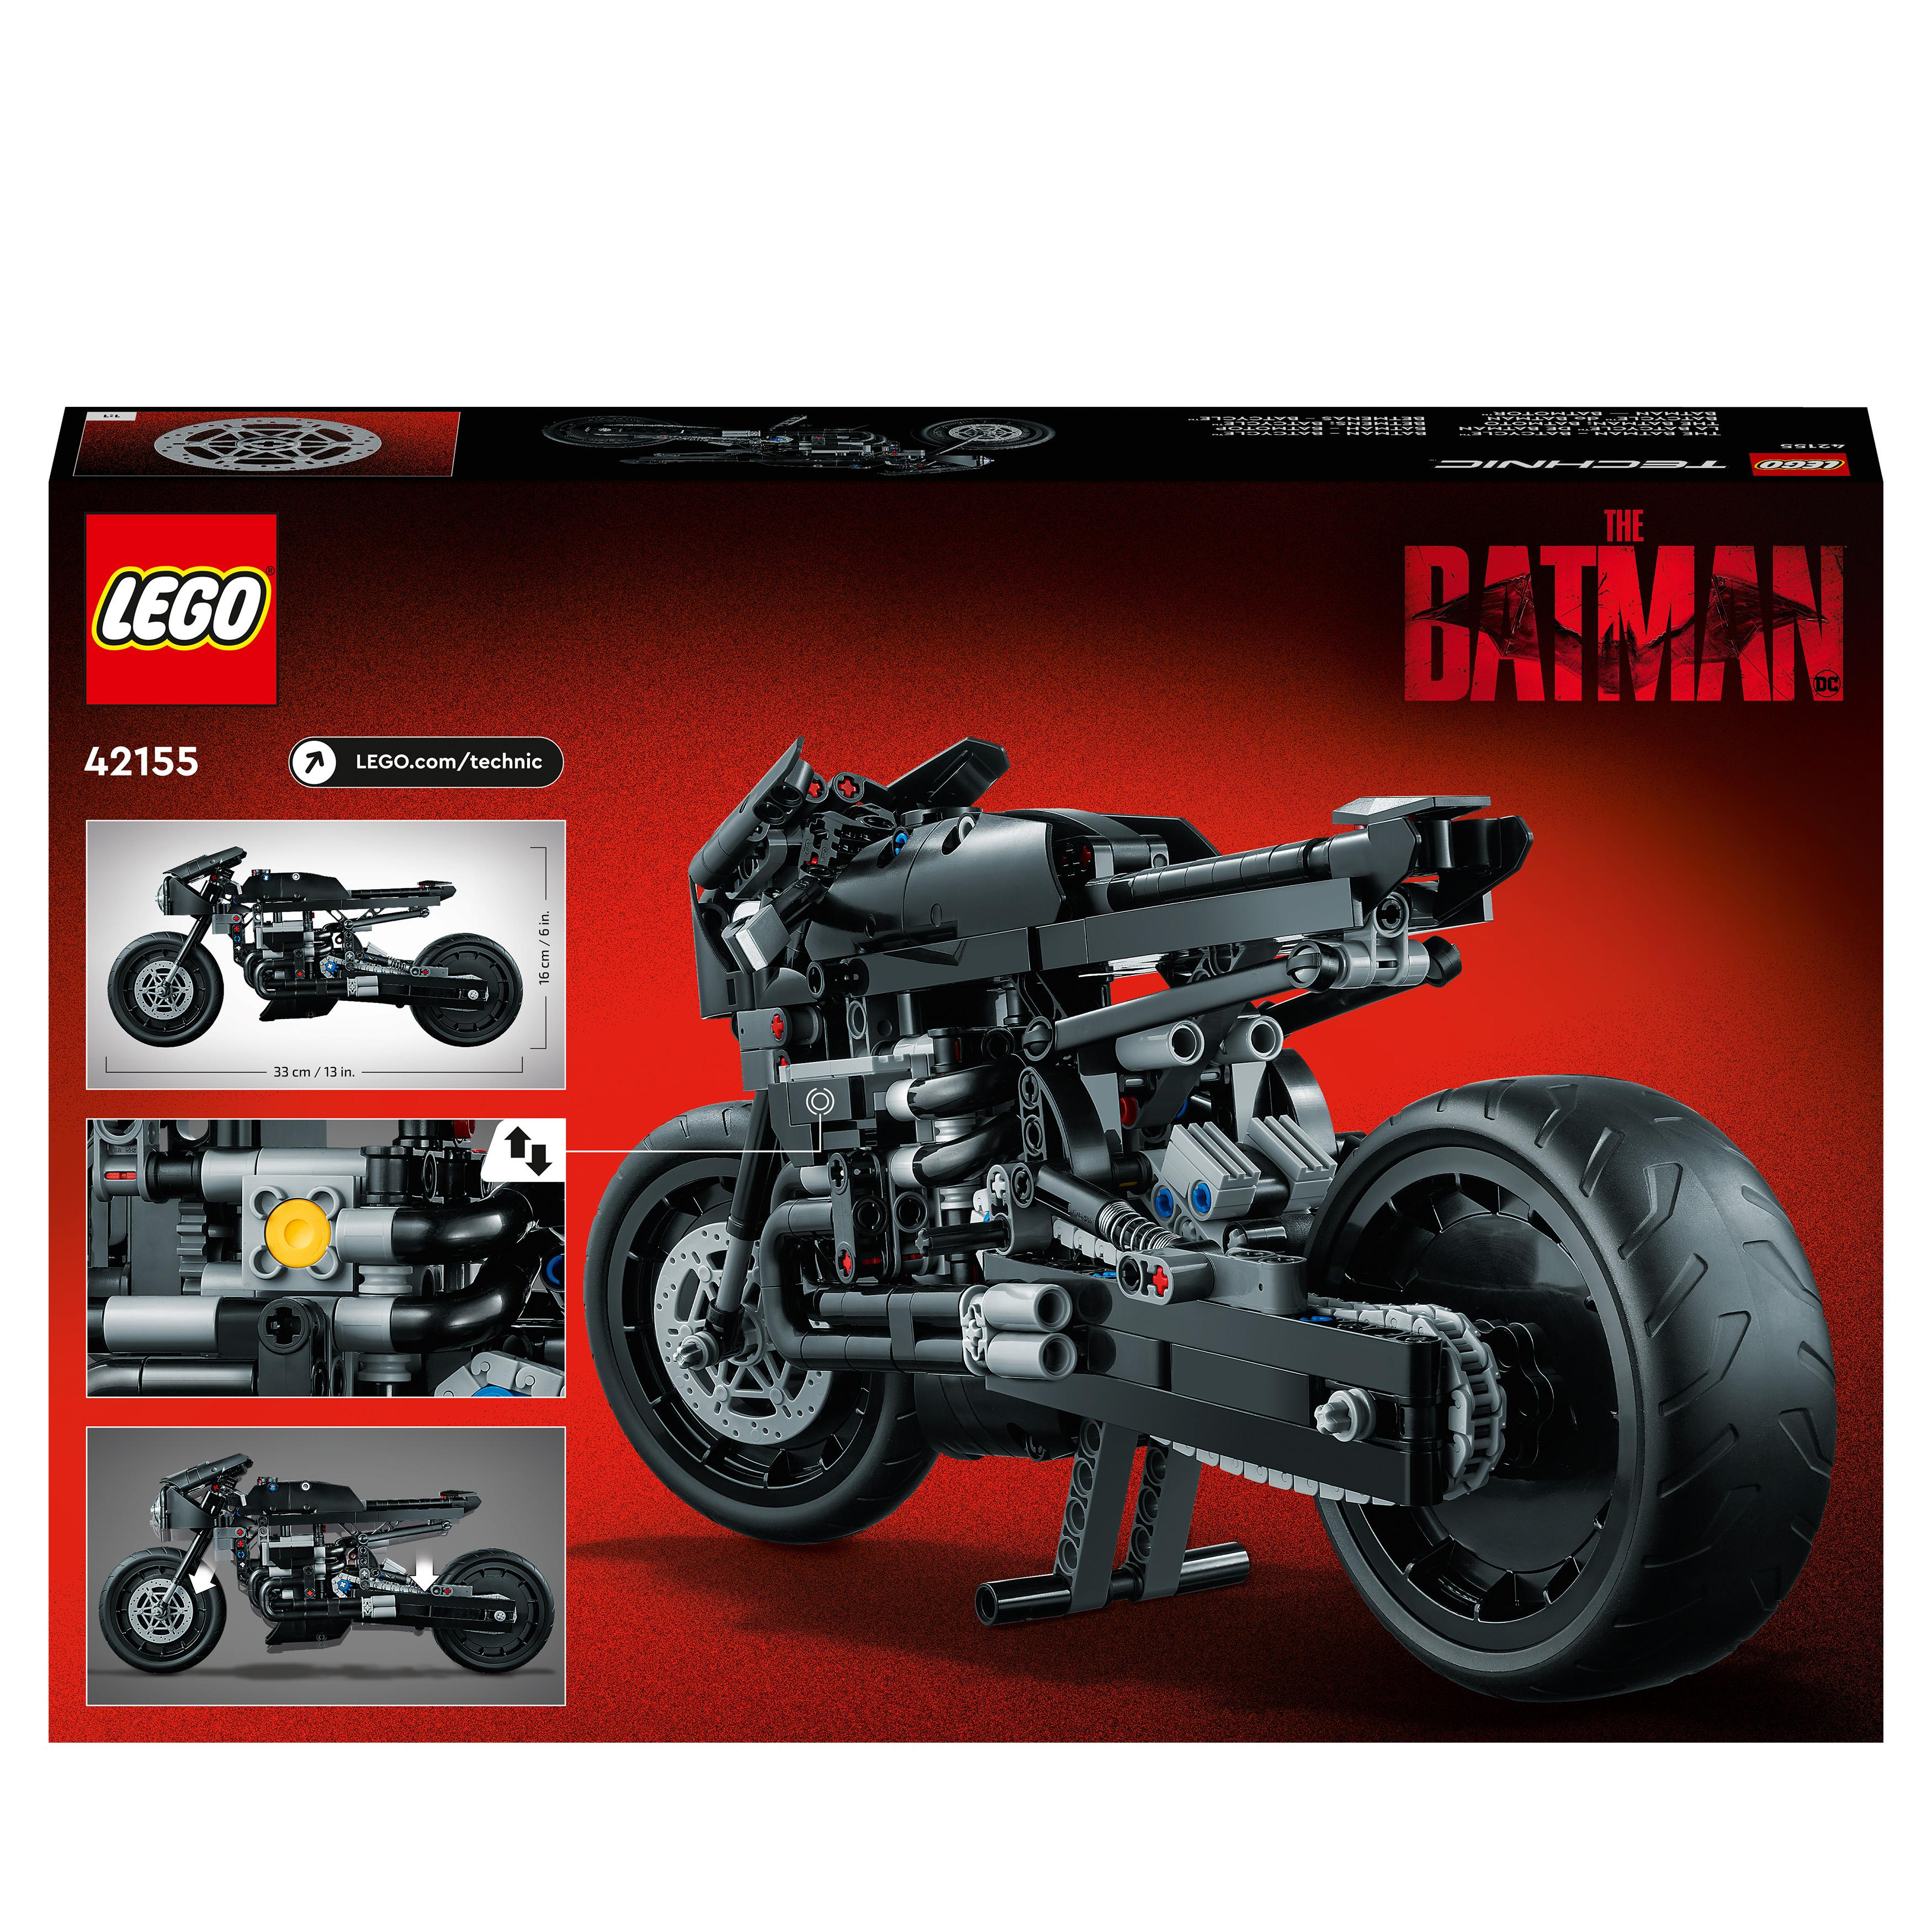 LEGO Technic 42155 THE BATCYCLE BATMAN – Mehrfarbig Bausatz